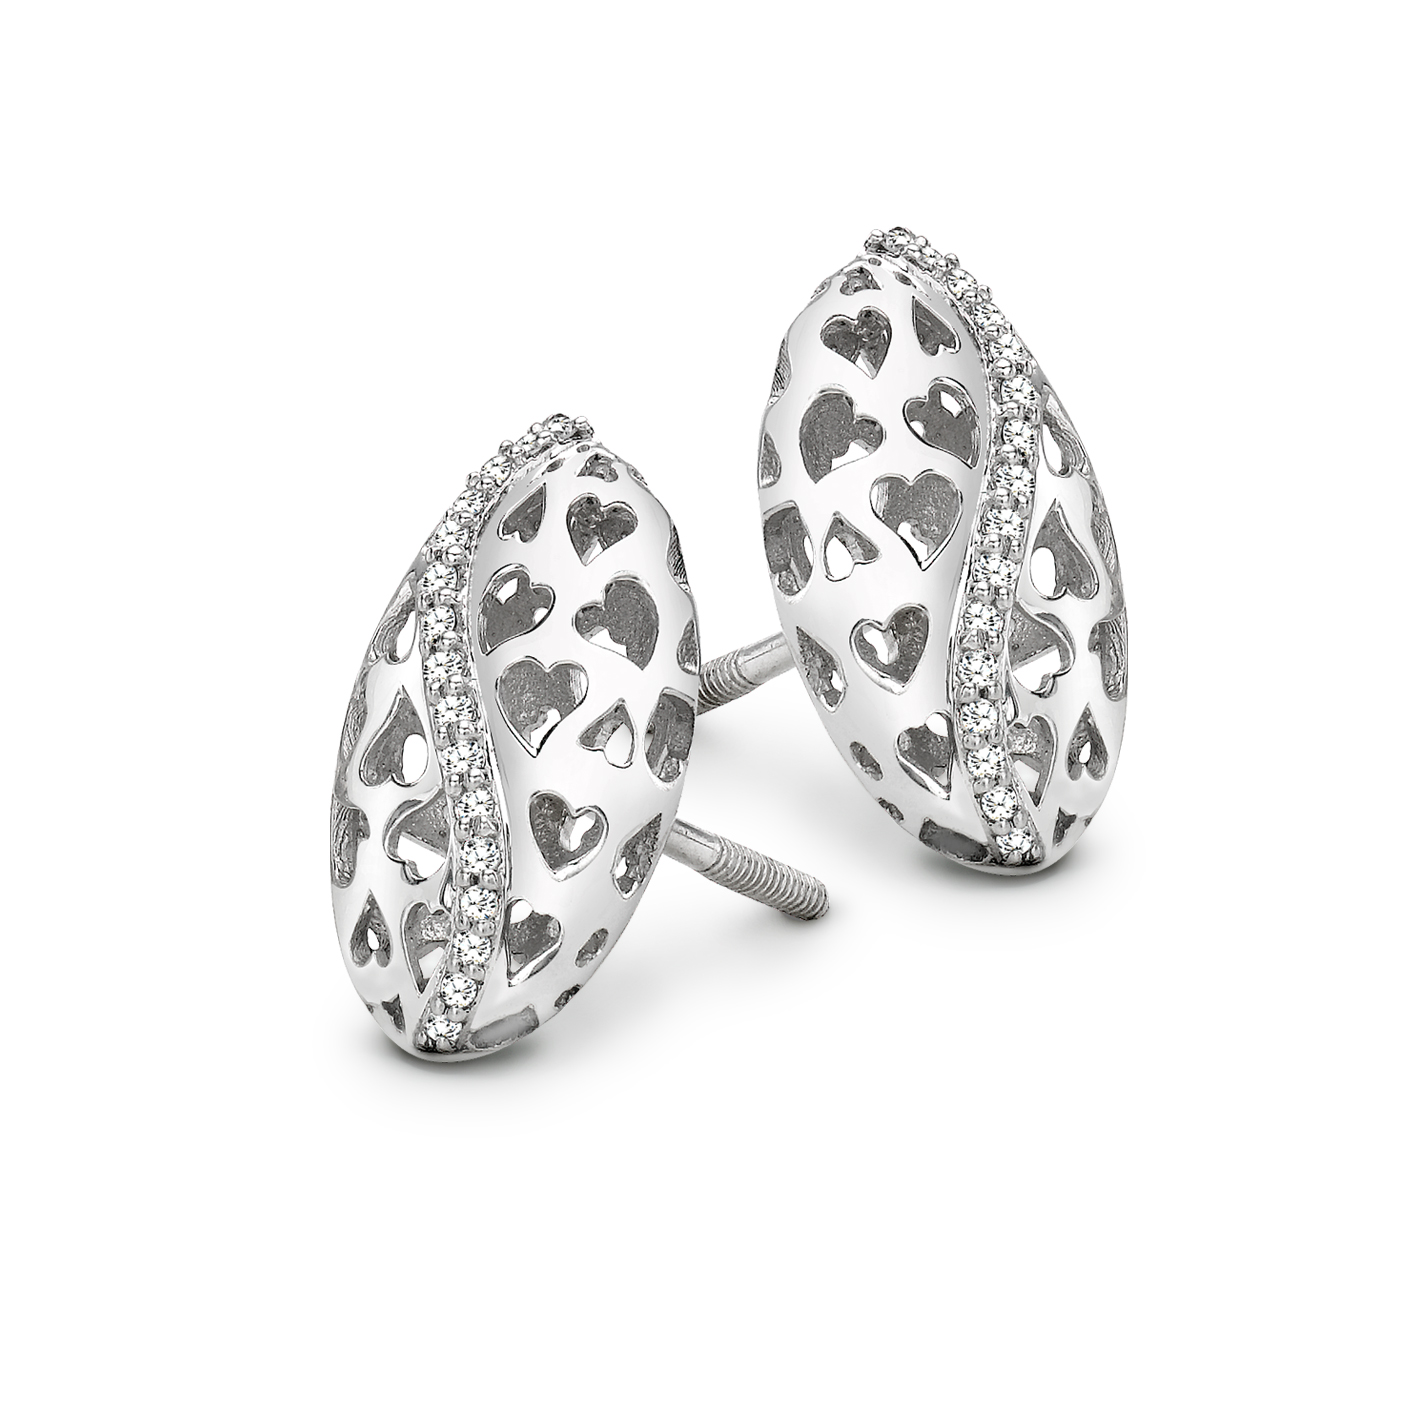 Beautifully crafted platinum earrings by Joyalukkas